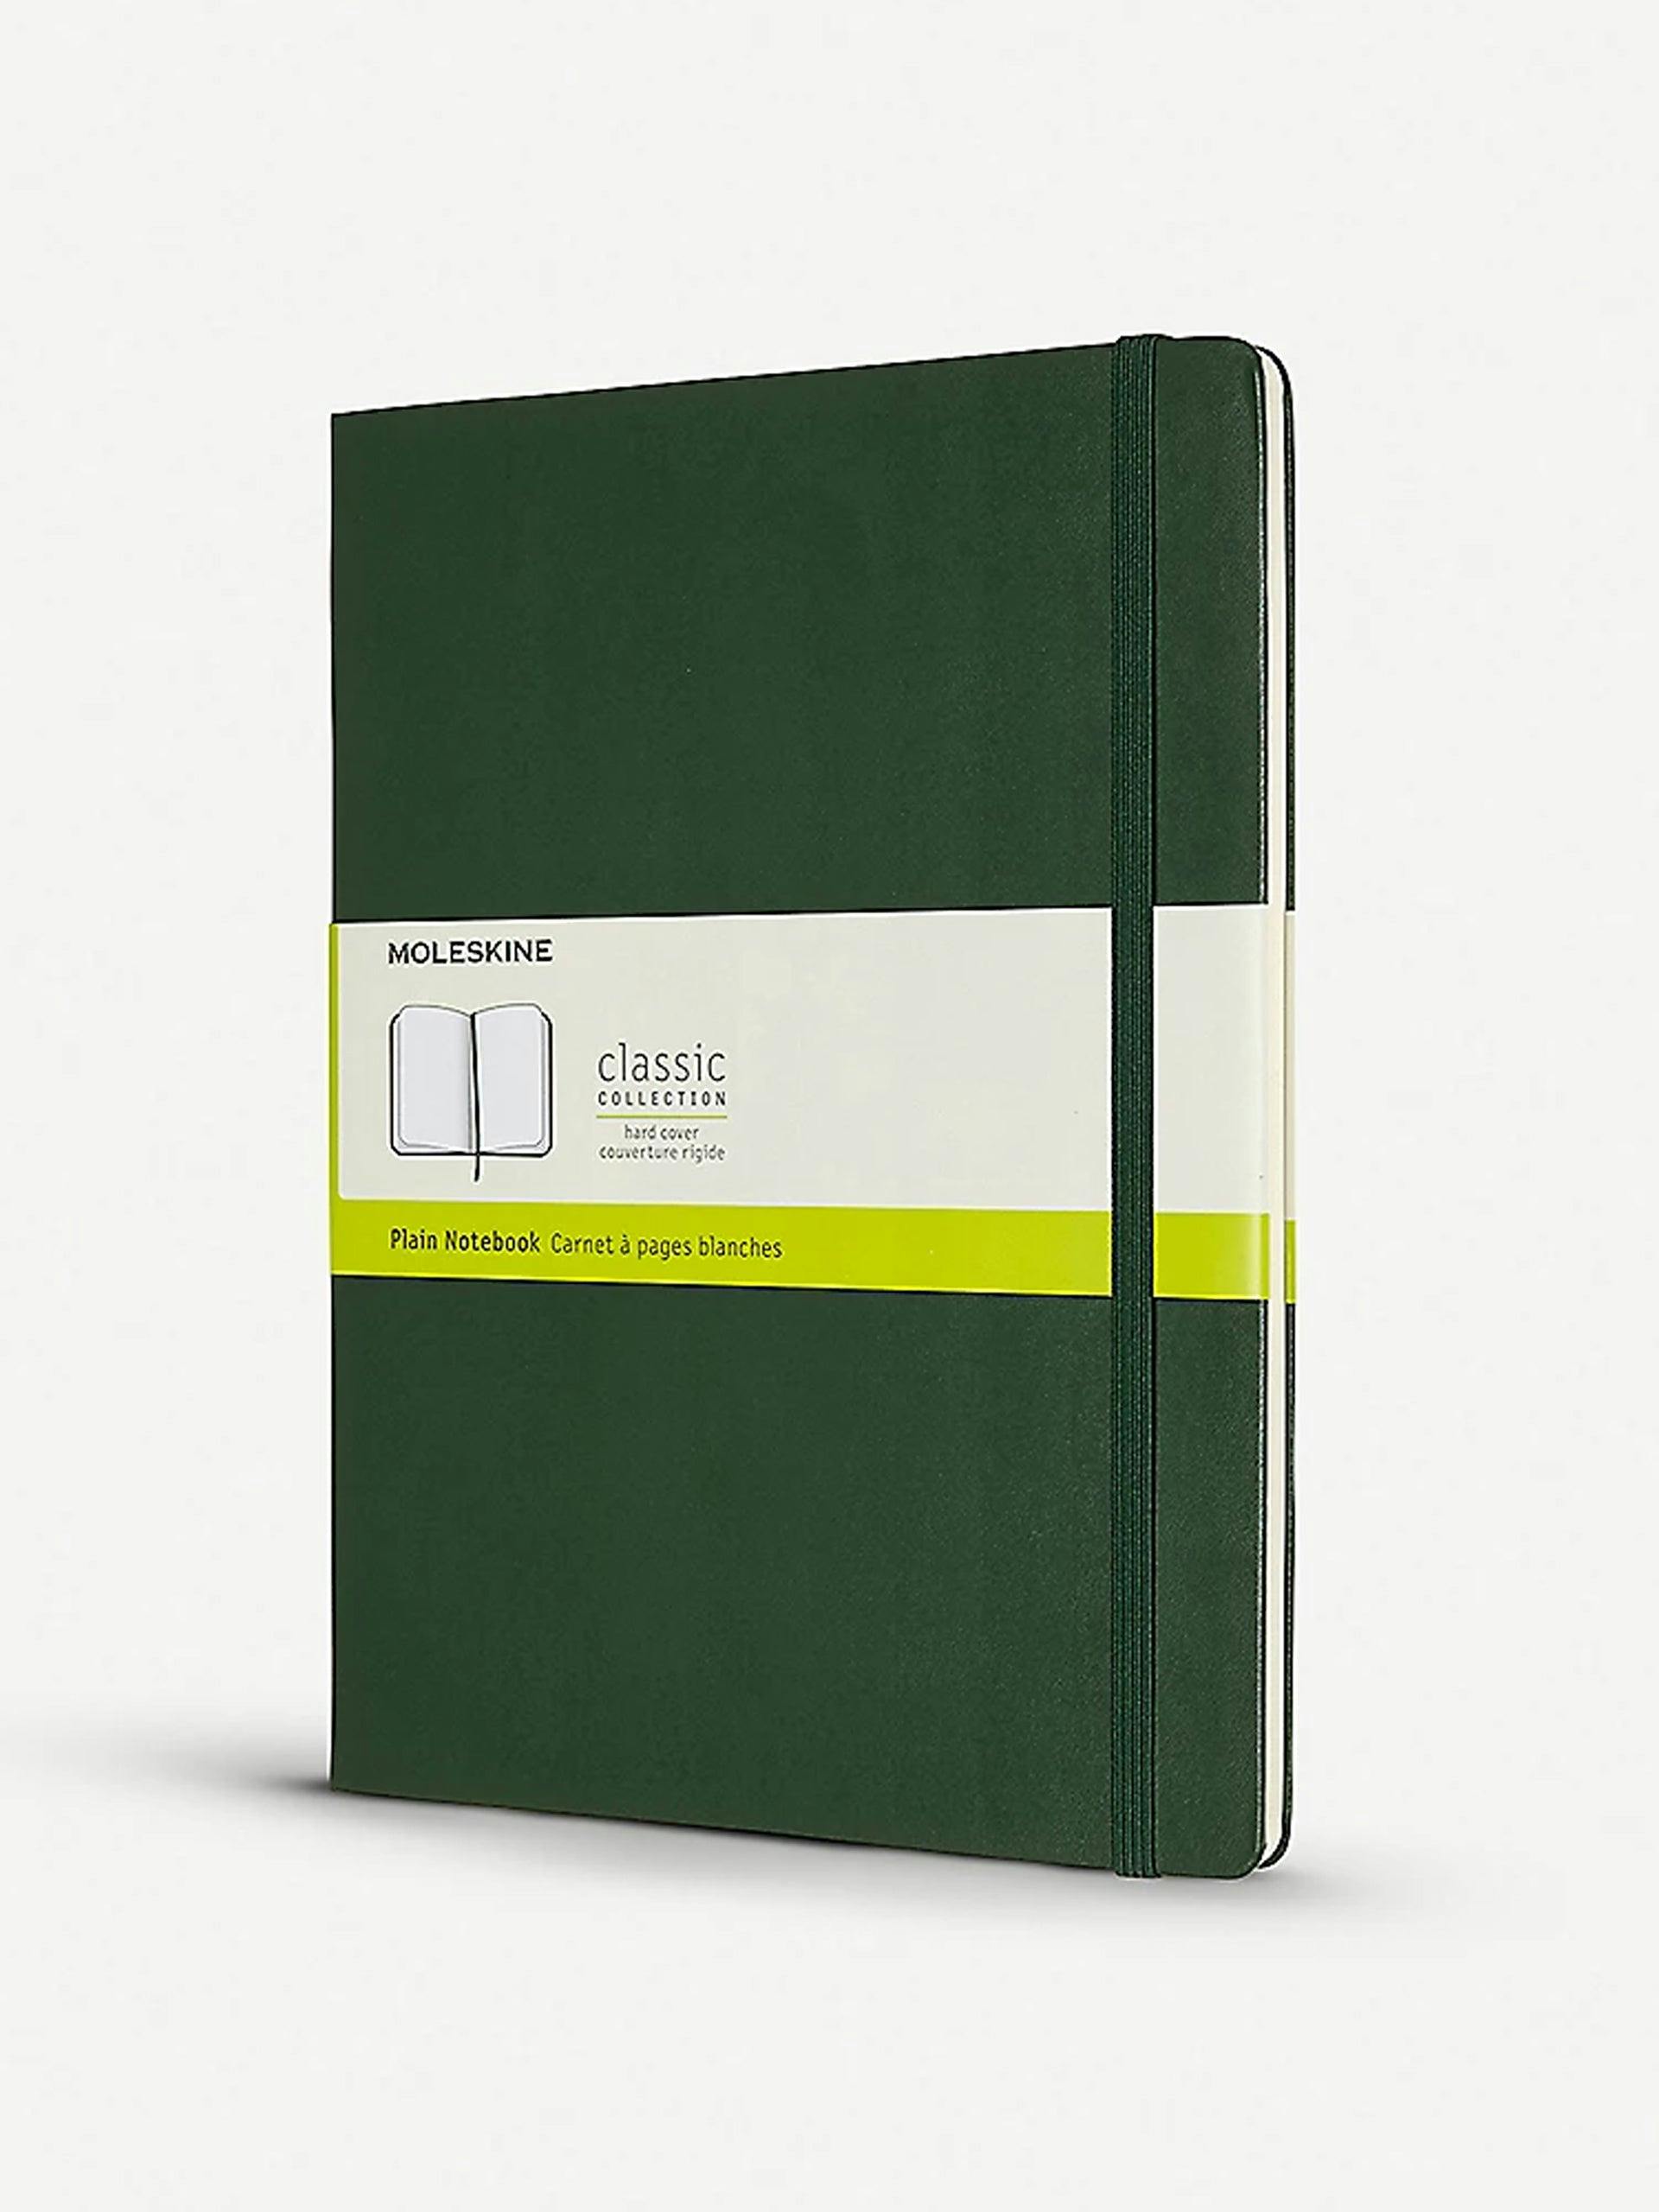 Extra-large plain hardcover notebook